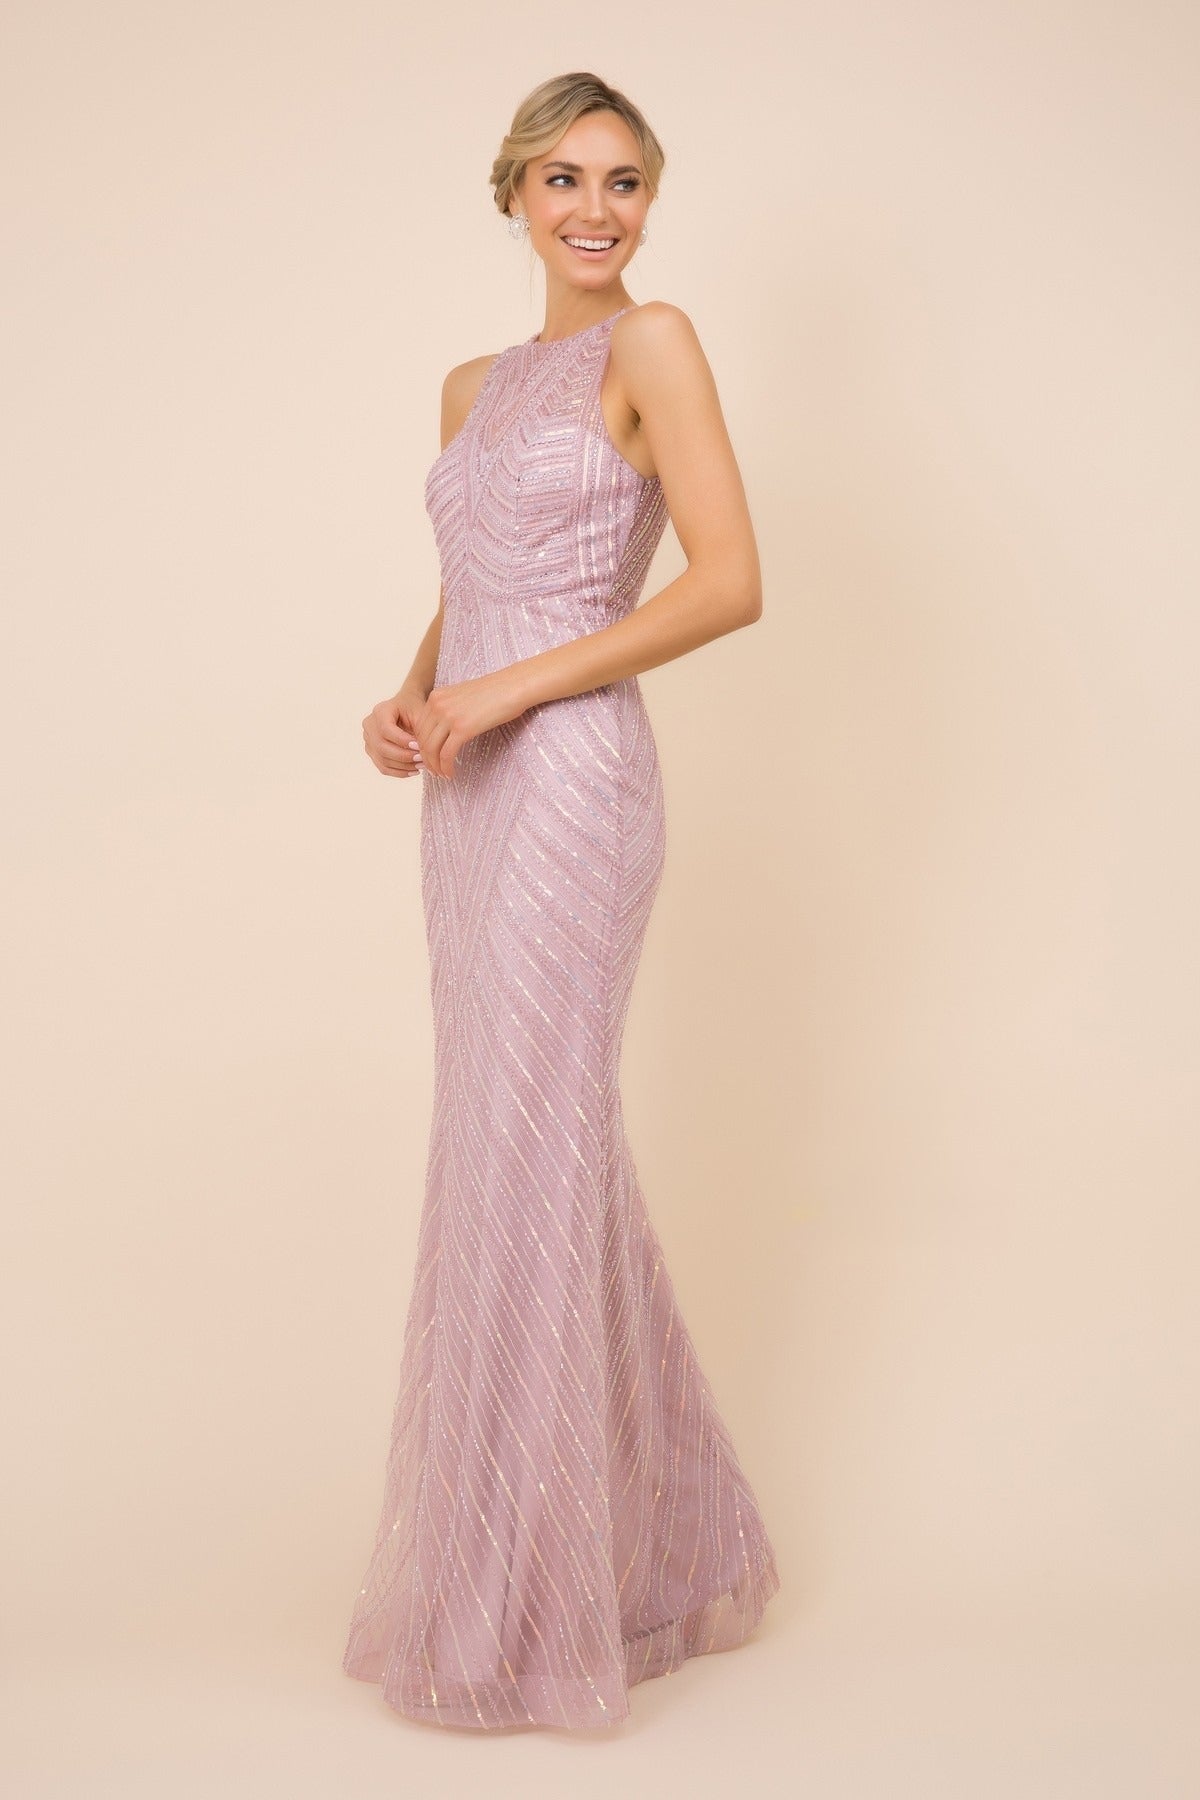 Embellished Sequin High Neck Mermaid Long Evening Dress NXH404 Elsy Style Evening Dress